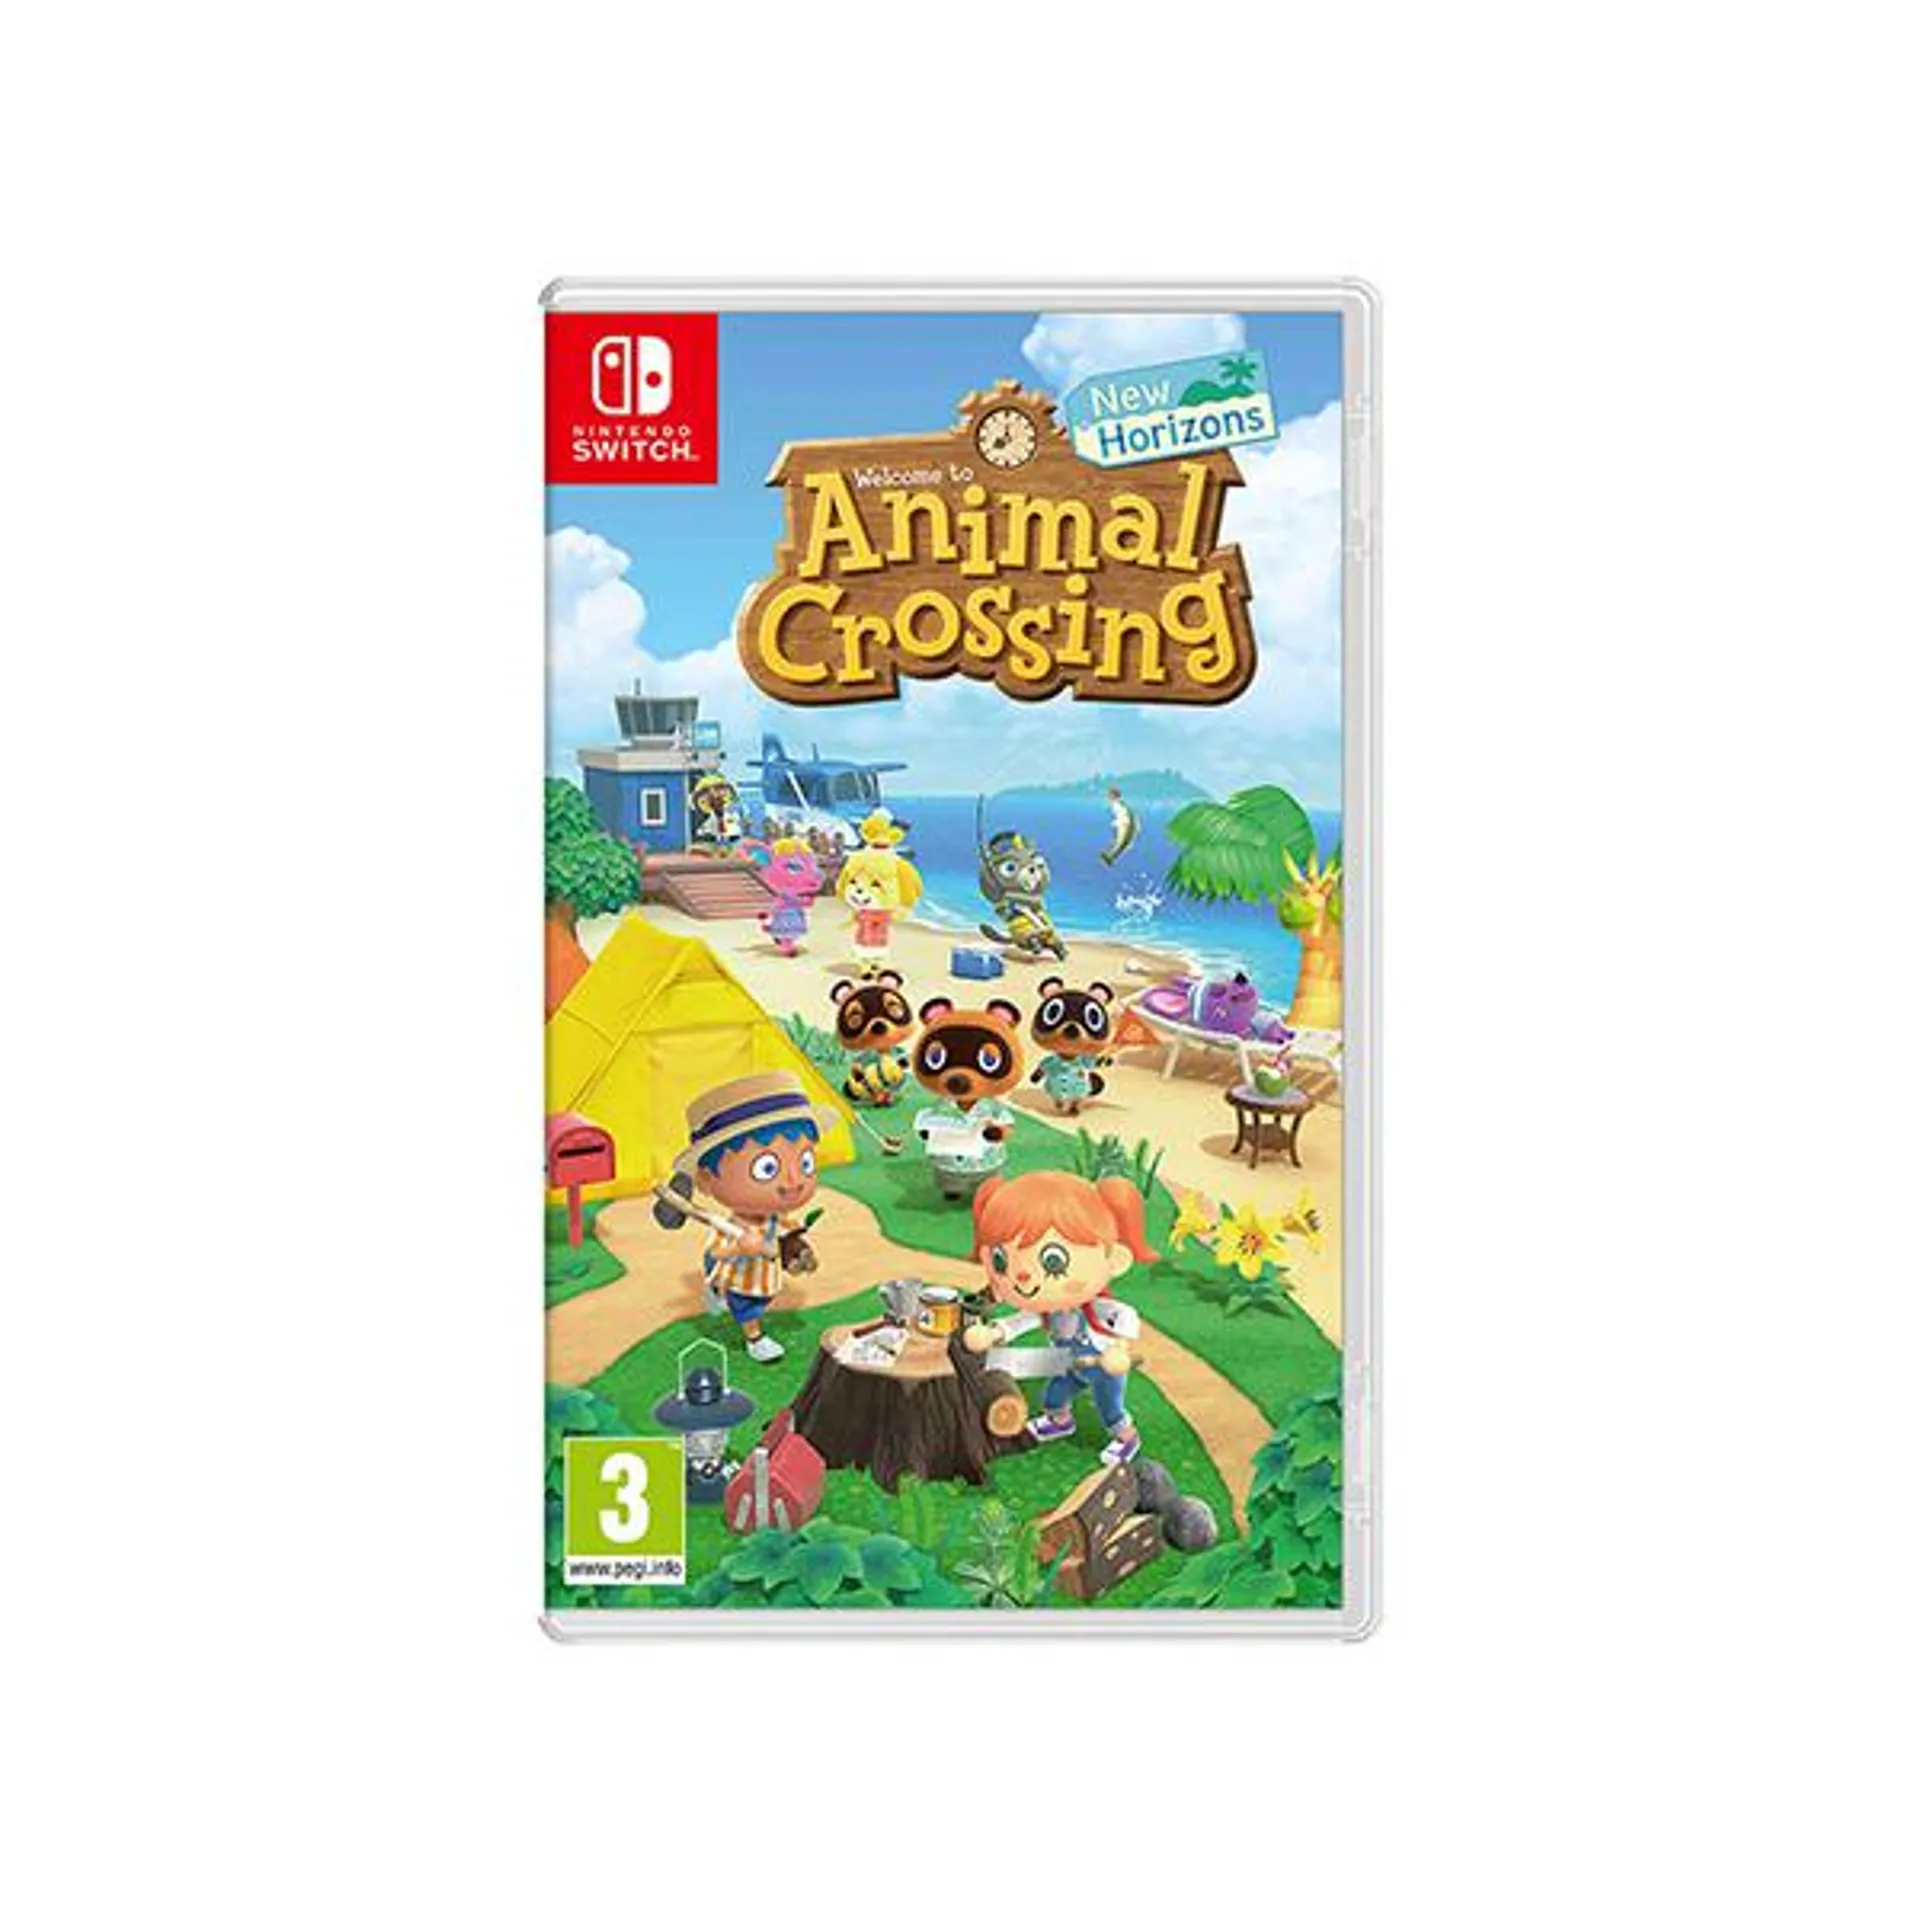 Animal Crossing: New Horizons for Nintendo Switch